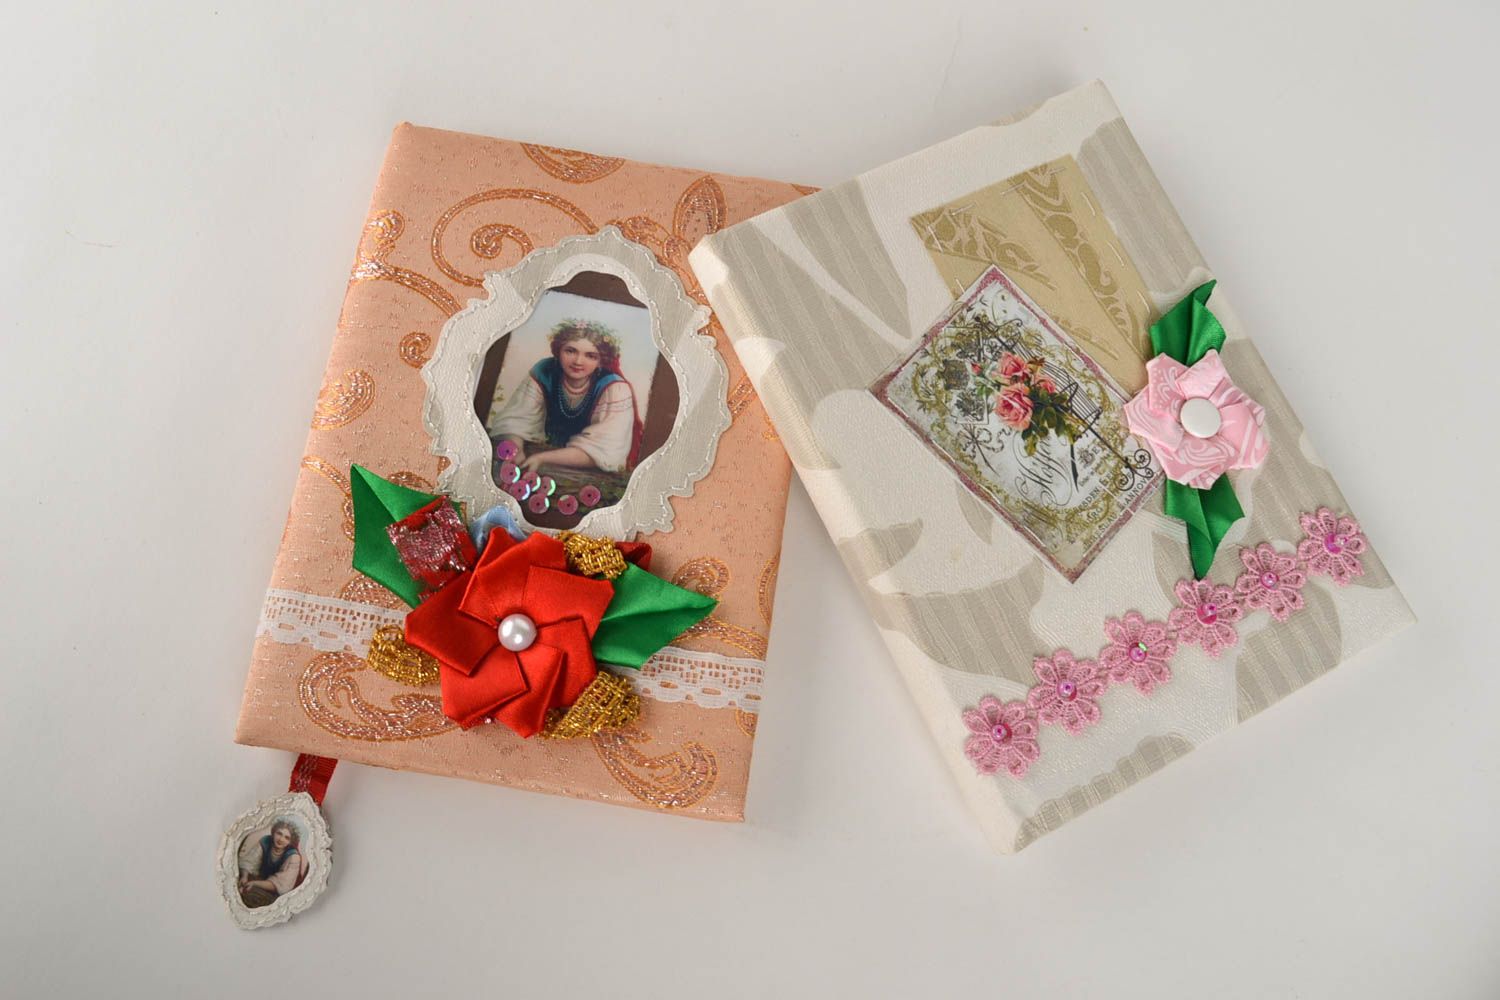 Blocs de notas hechos a mano agendas decoradas regalo original para mujer foto 4